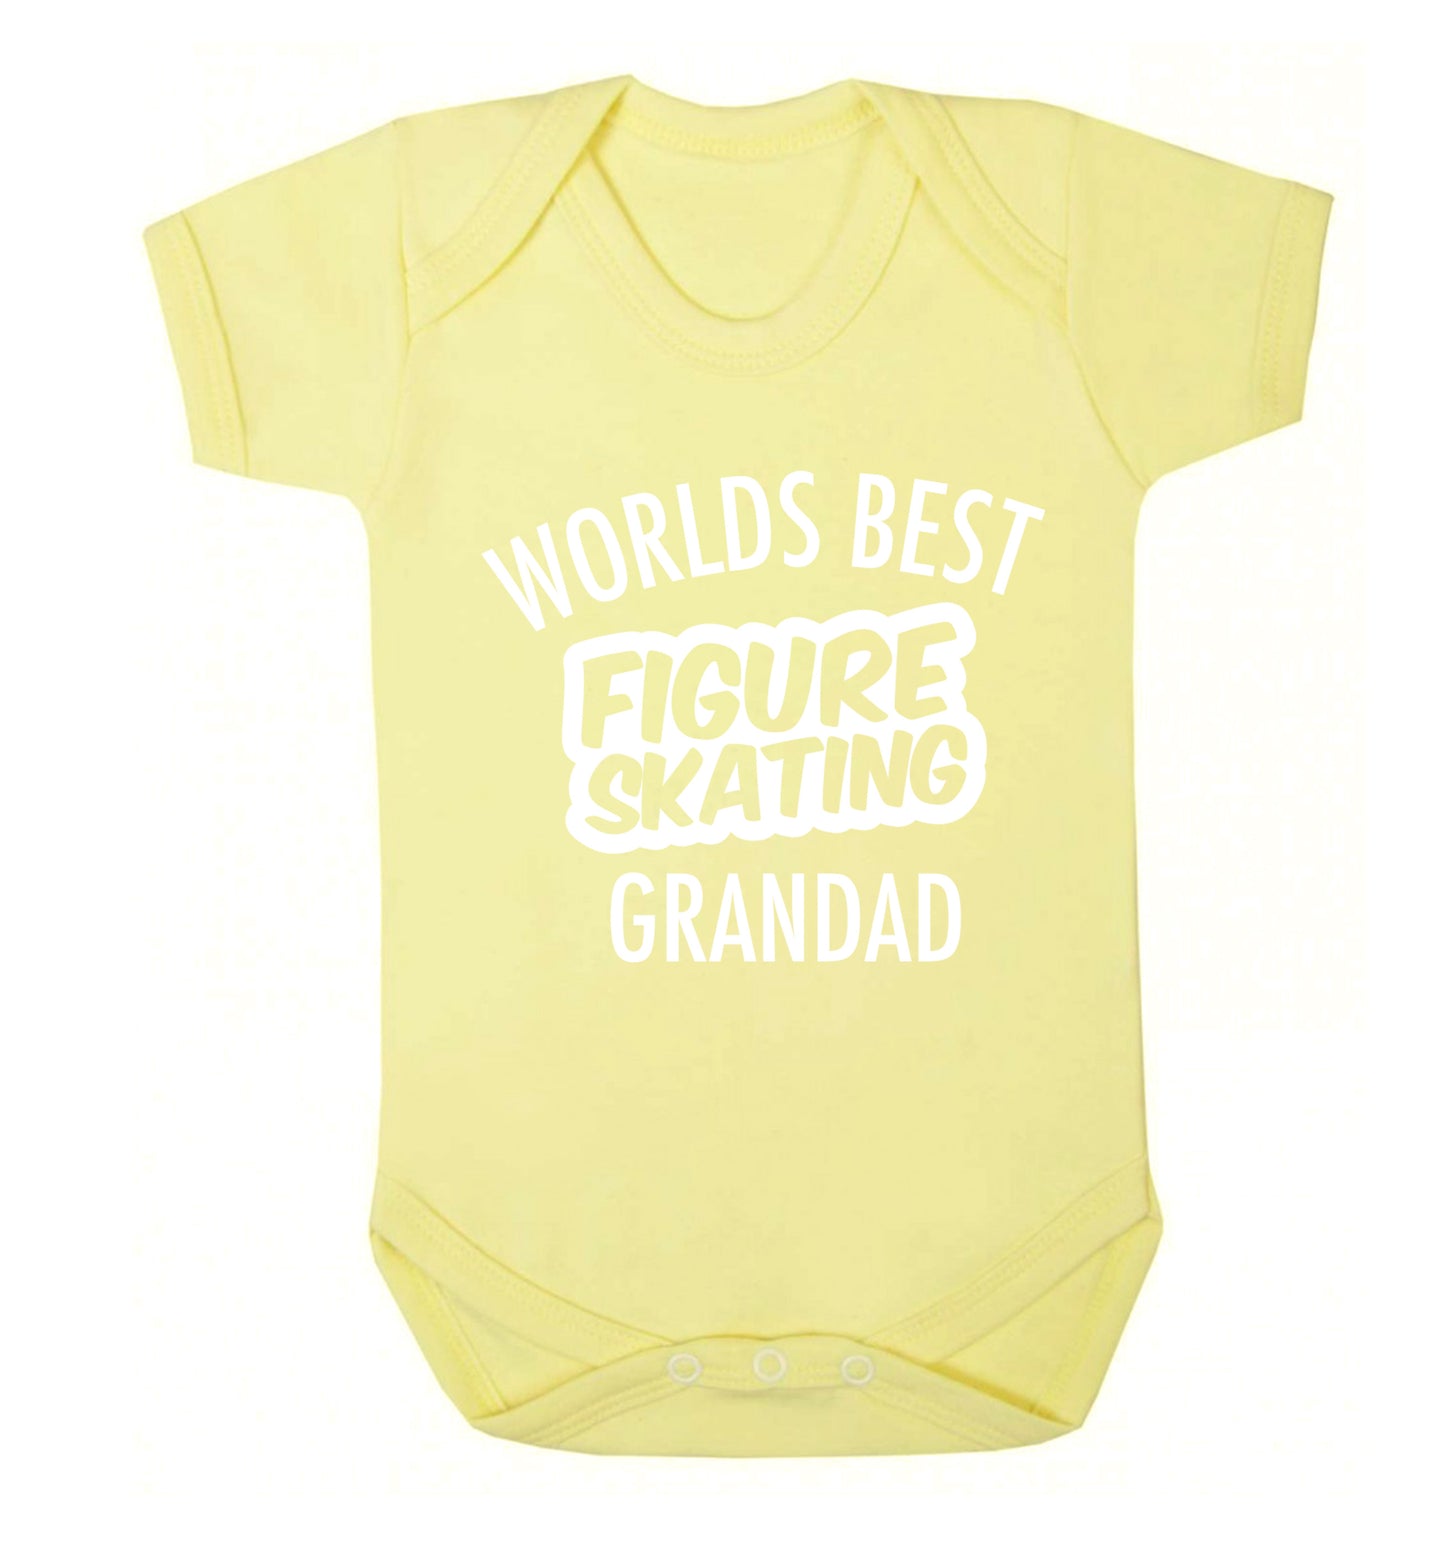 Worlds best figure skating grandad Baby Vest pale yellow 18-24 months